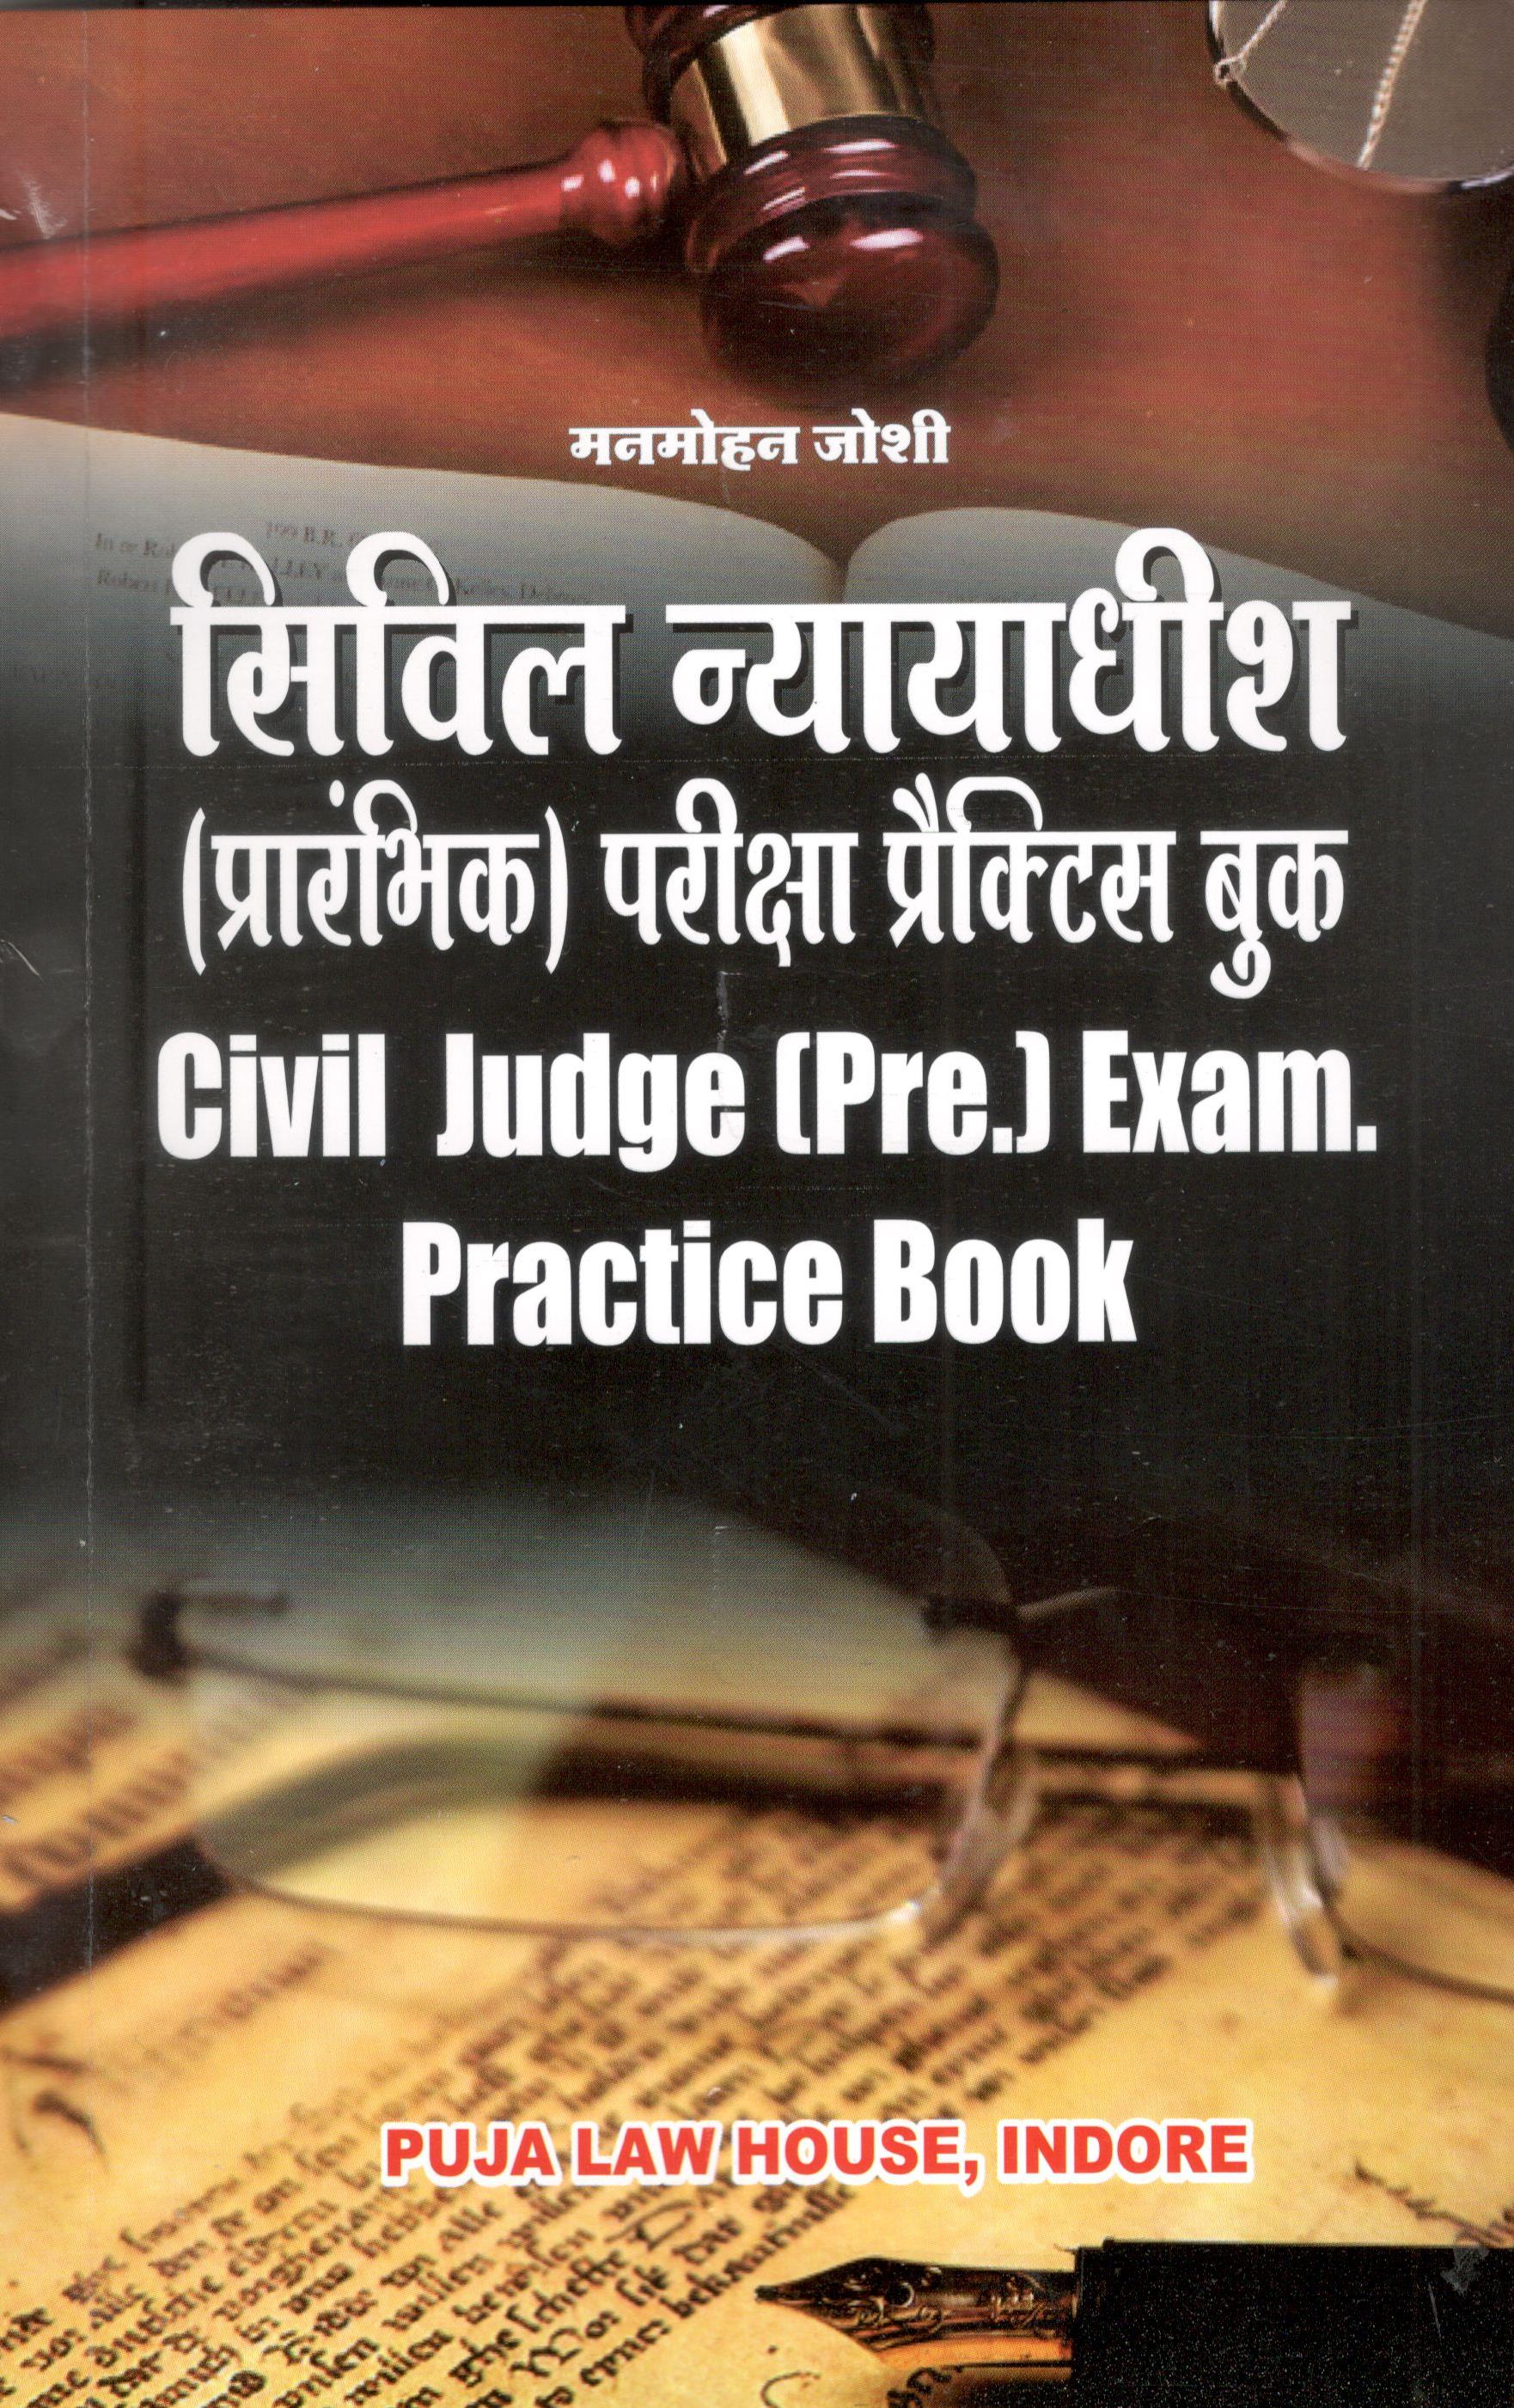 मनमोहन जोशी - सिविल न्यायाधीश (प्रारंभिक) परीक्षा प्रैक्टिस बुक / Civil Judge (Pre.) Exam Practice Book